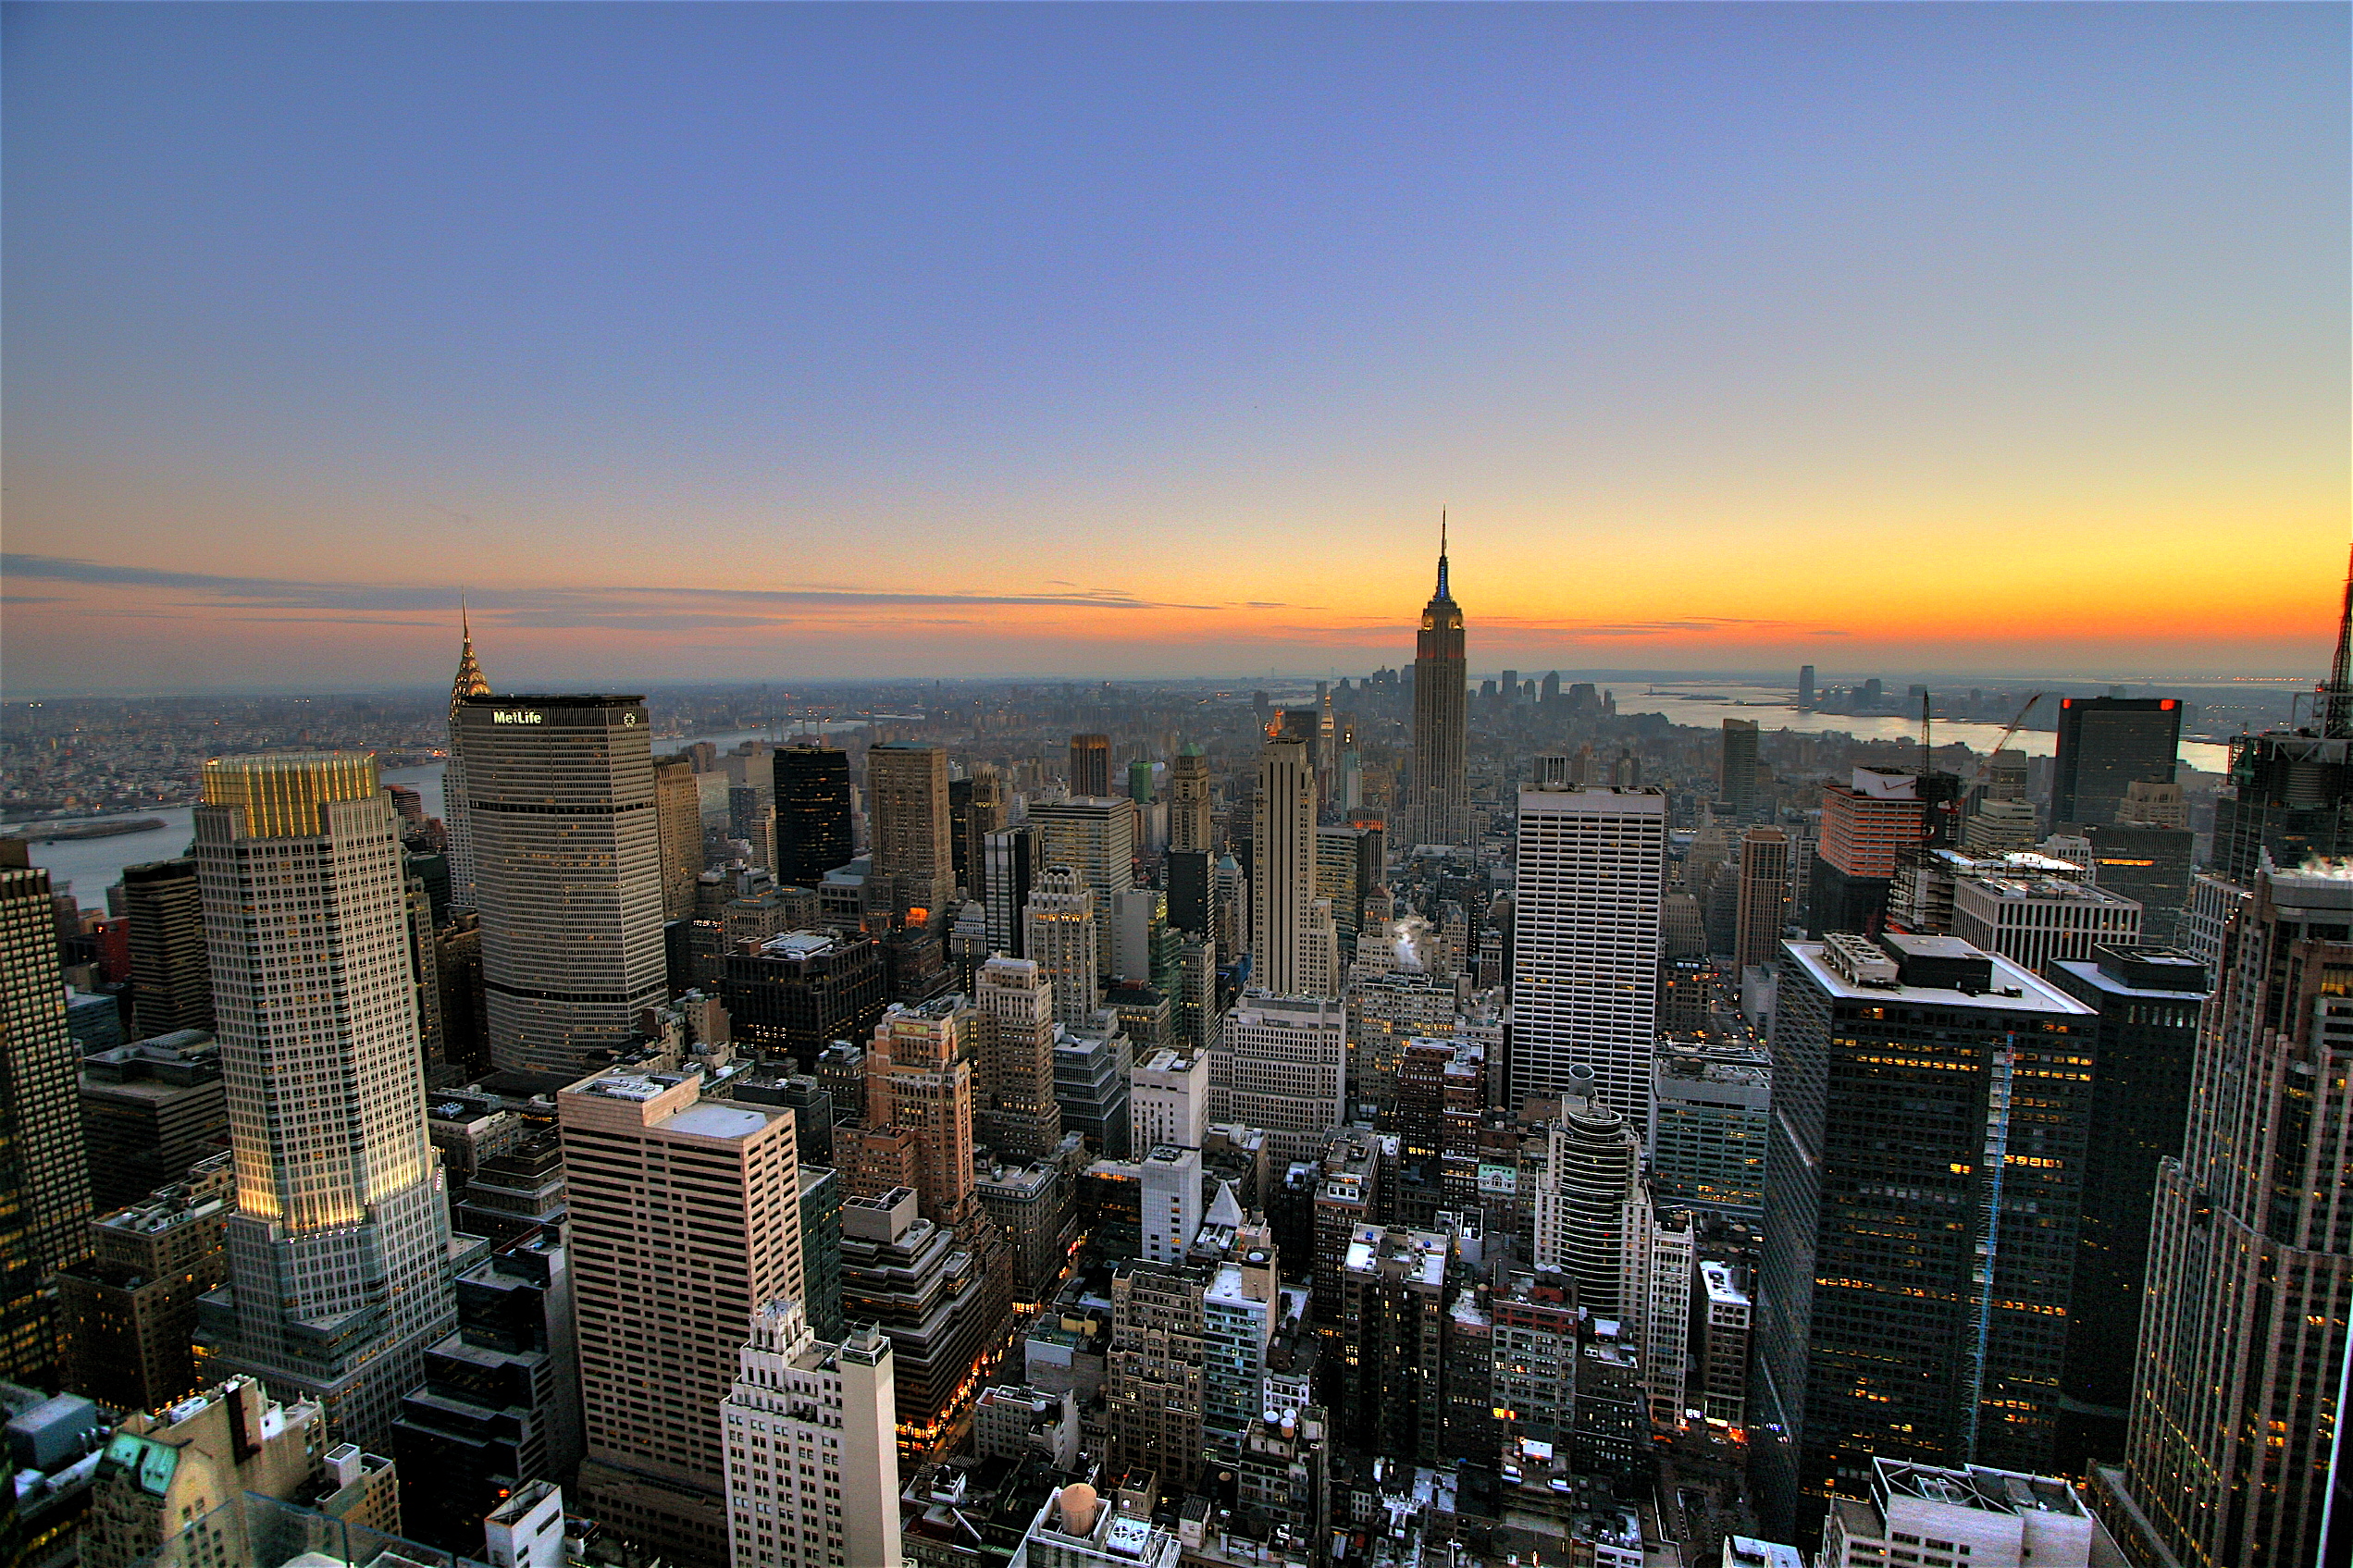 Download mac wallpaper hd new york - New York City Skyline Sunset ...